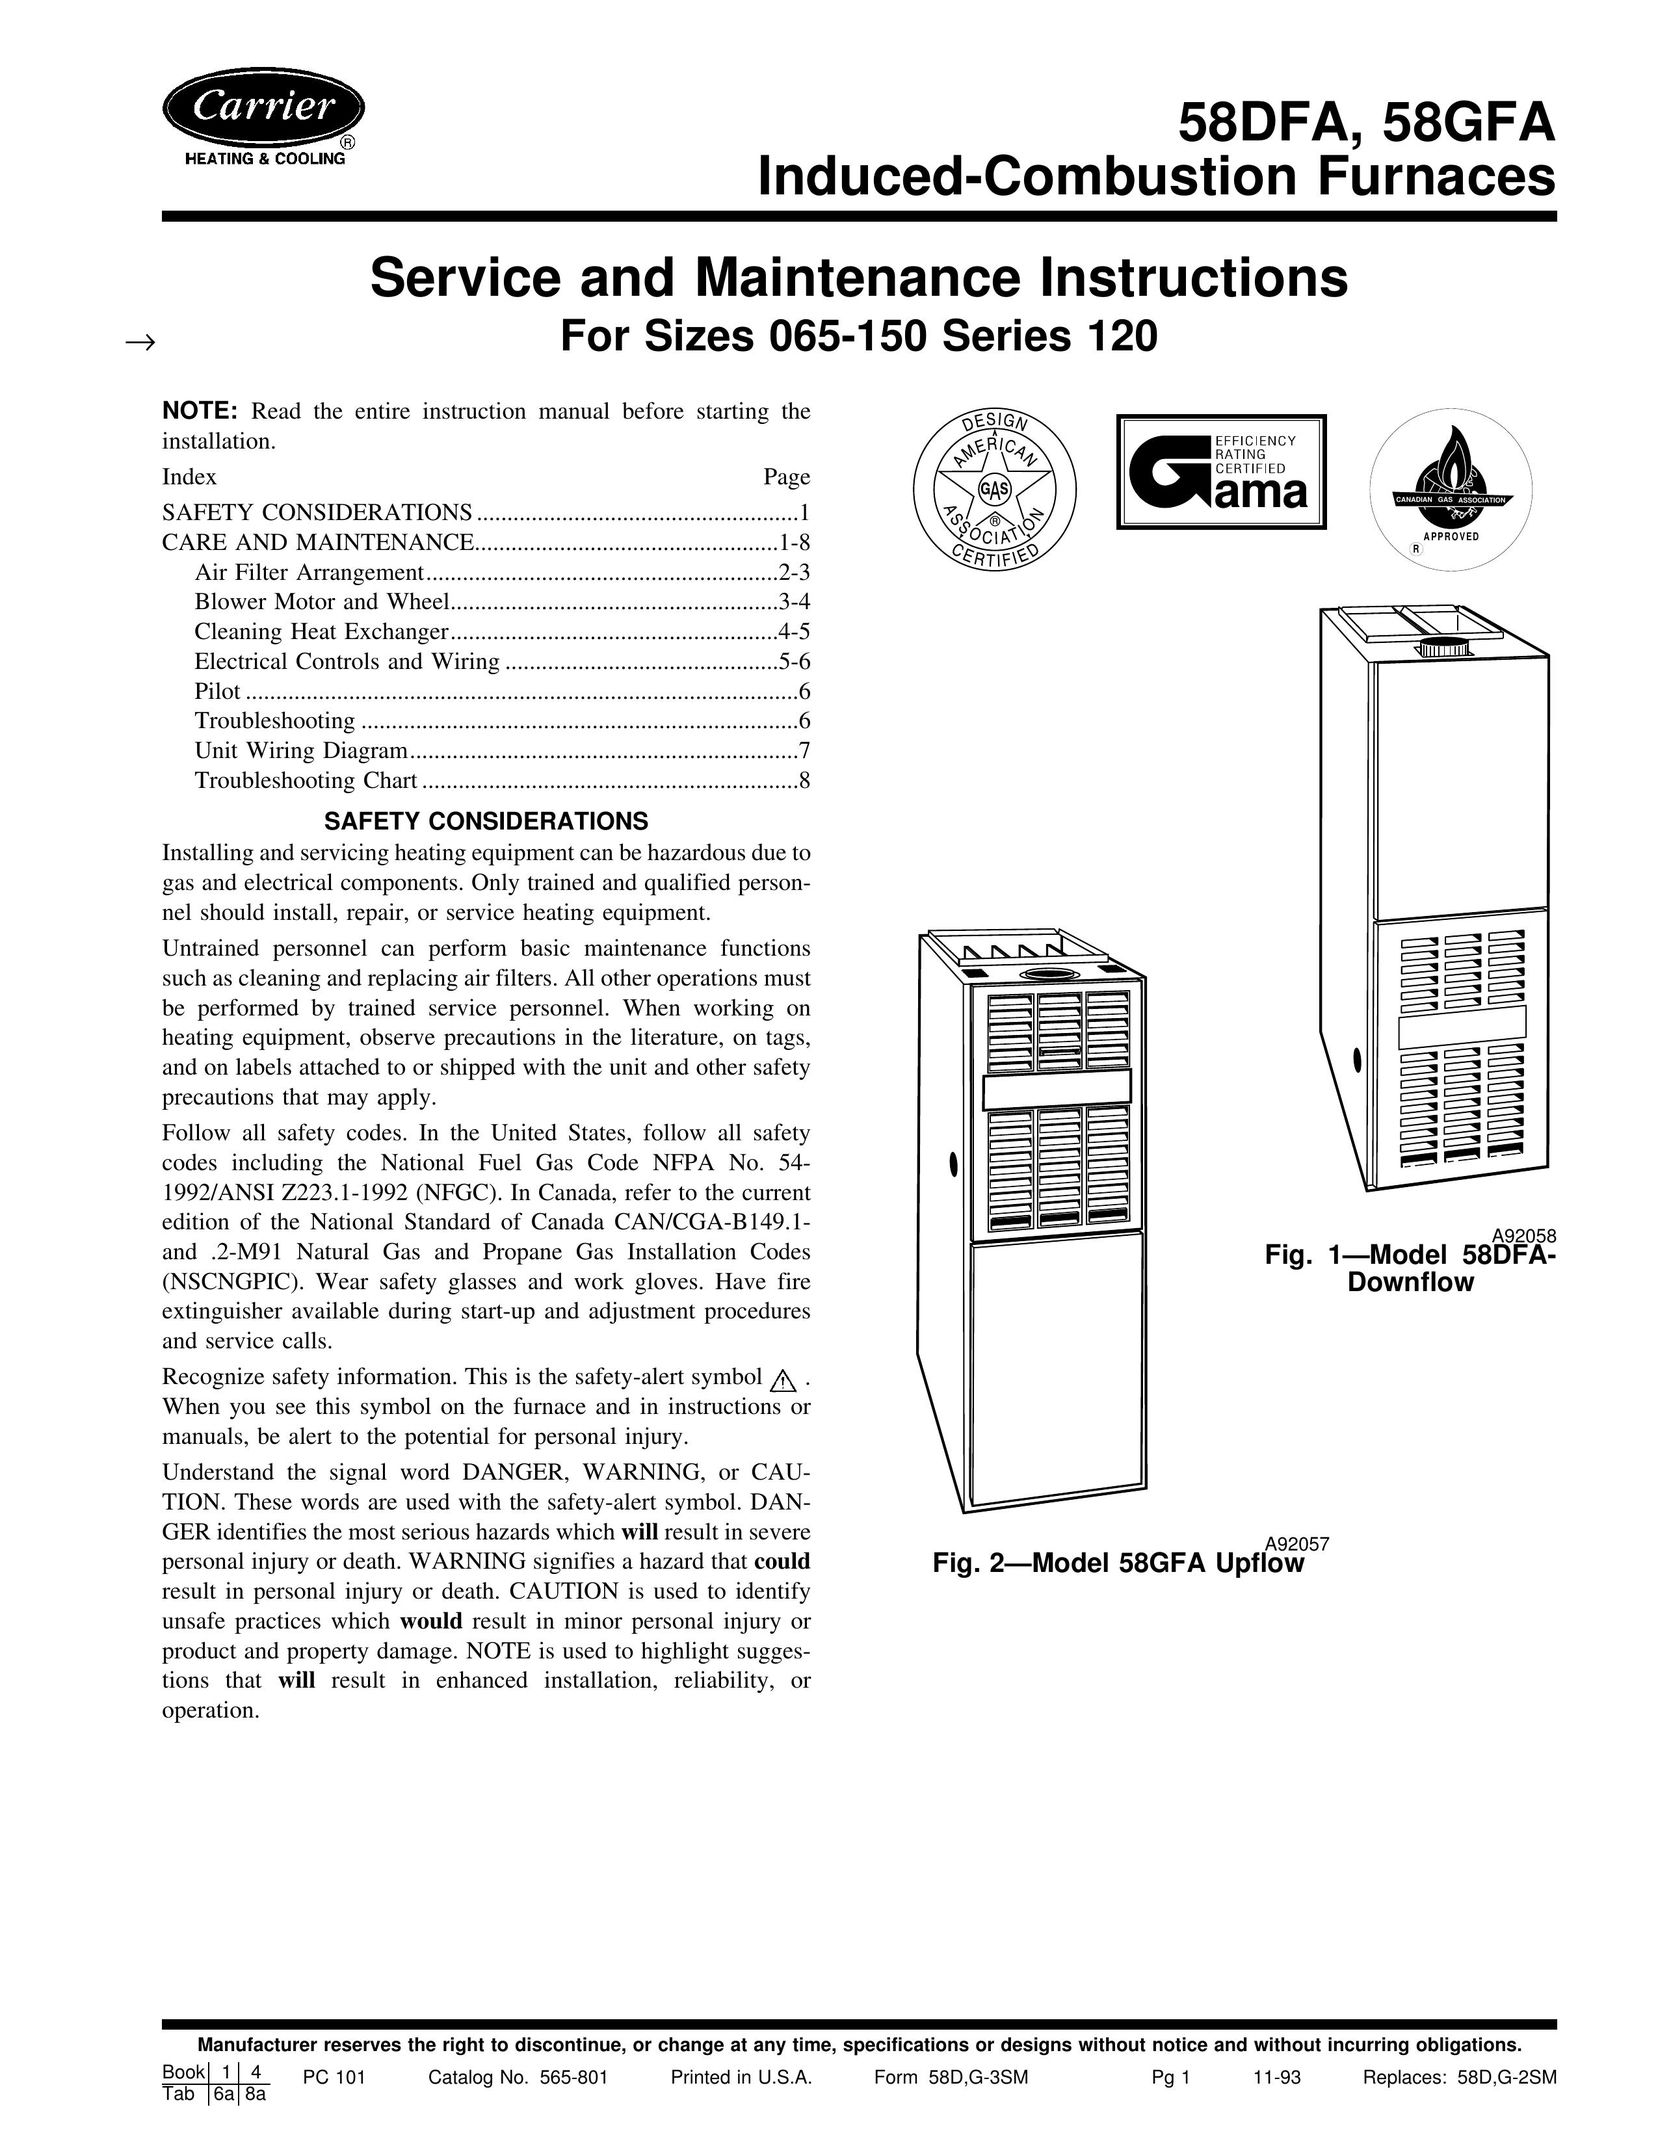 Carrier 58DFA Furnace User Manual